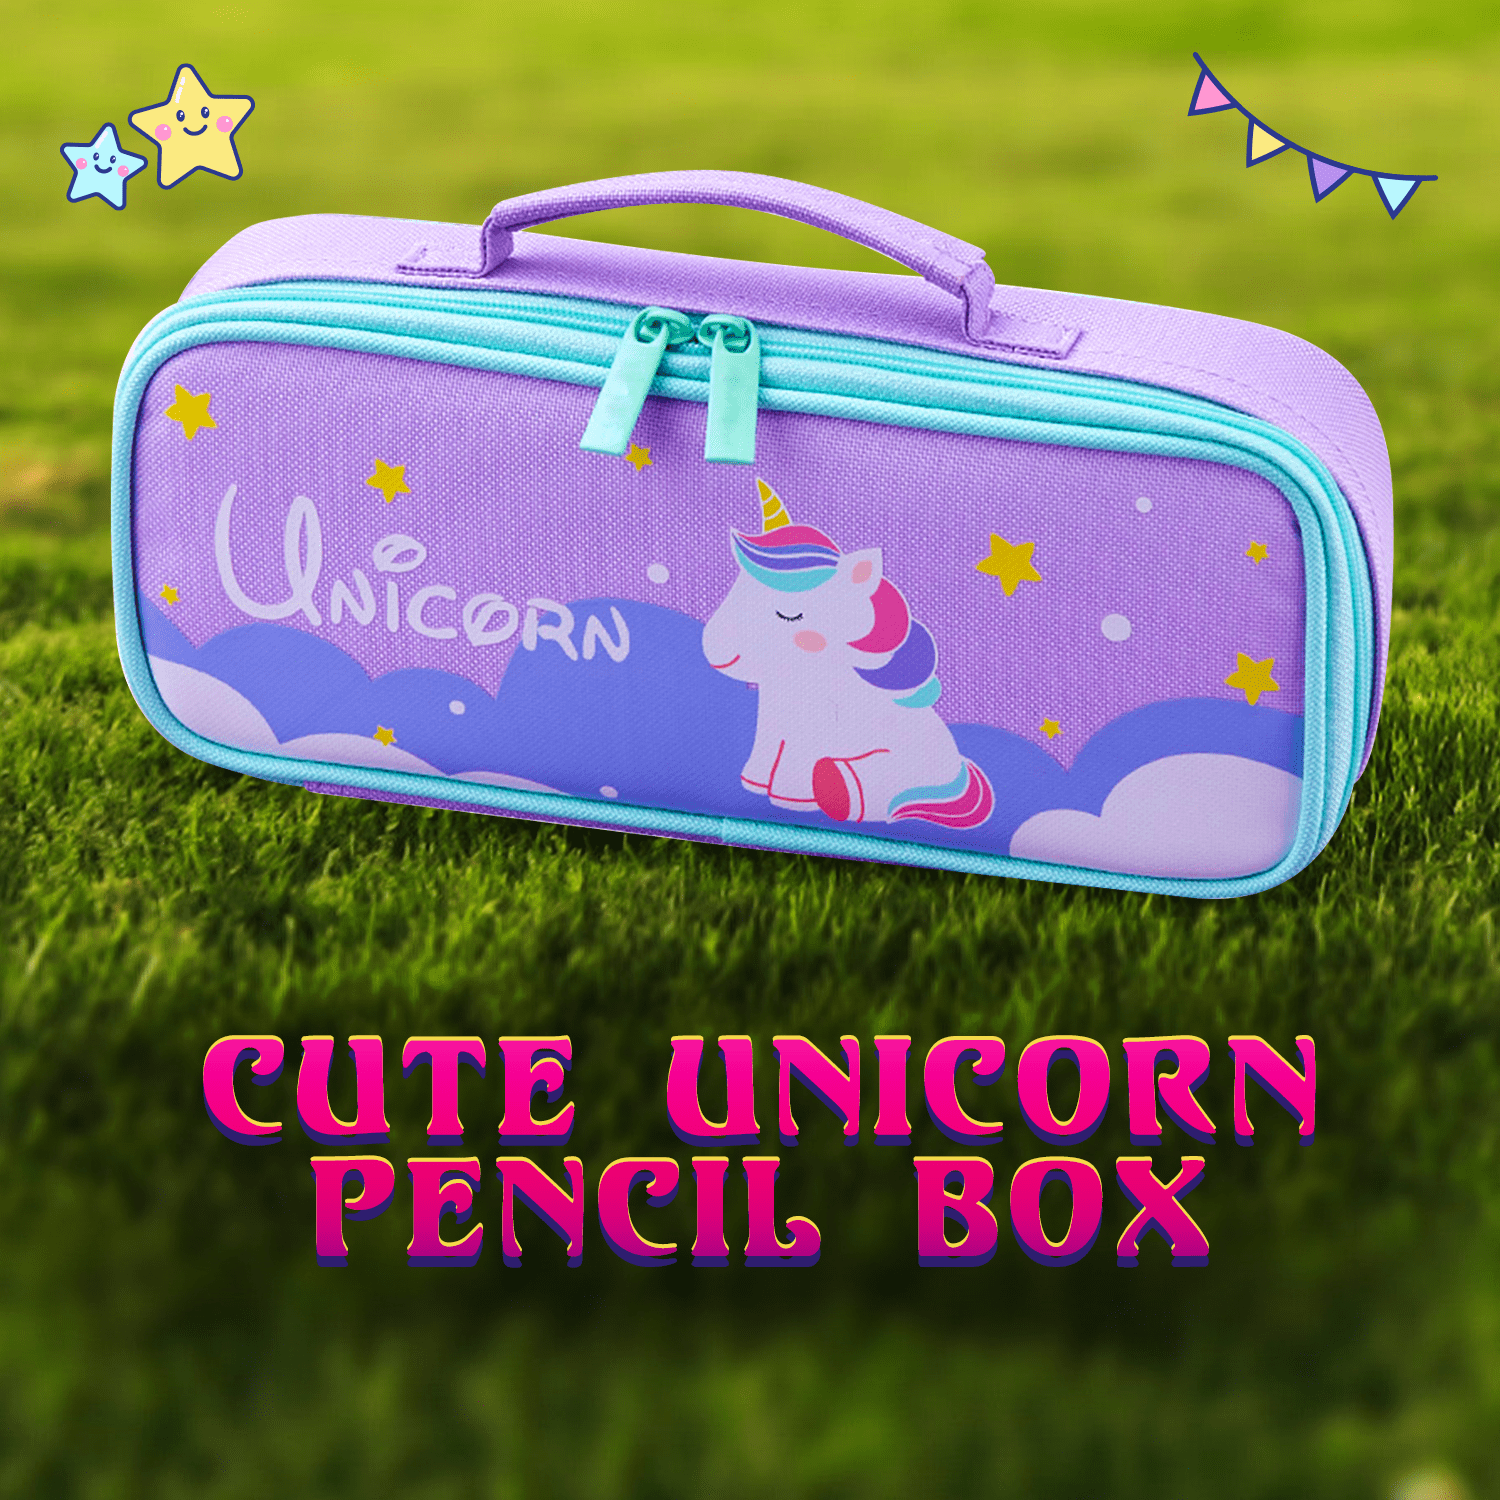 Kids Pencil Box With Super Cute Personalized Rainbow Unicorn Design